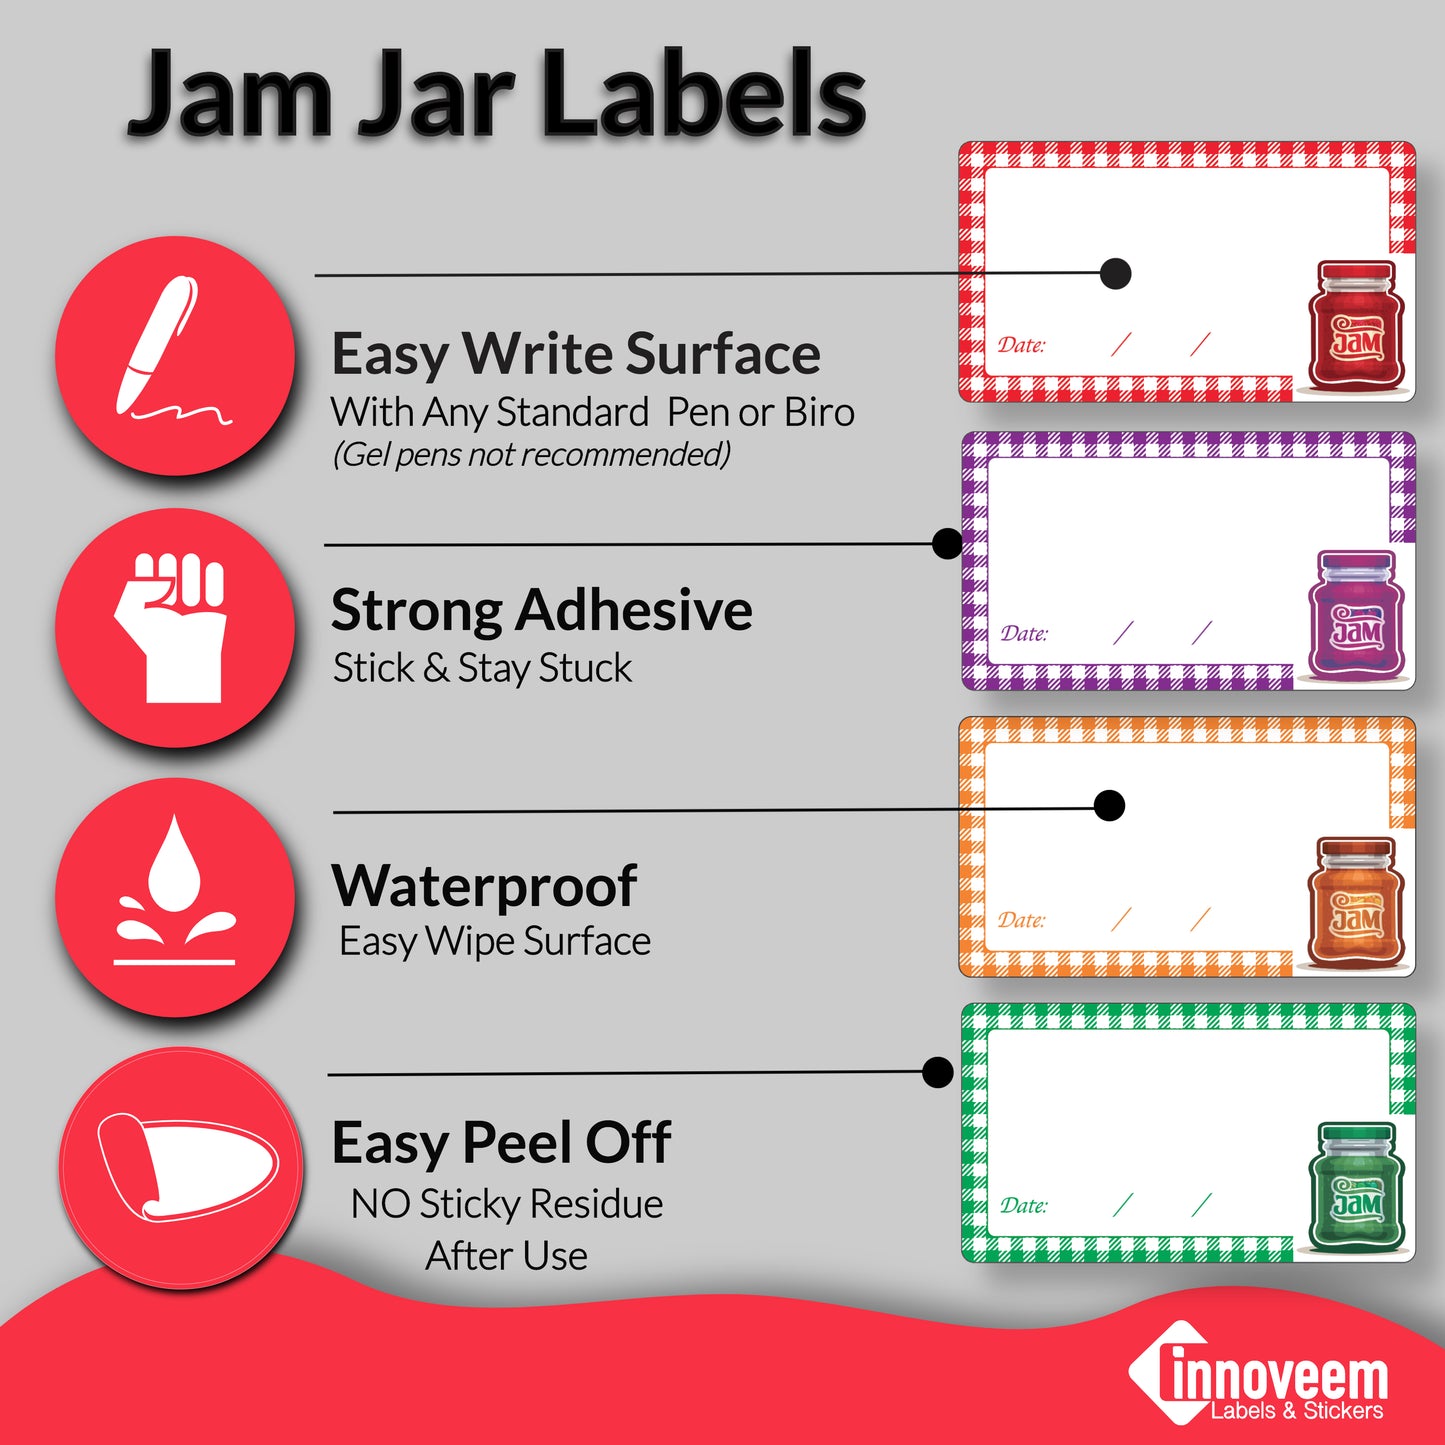 Jam Jar labels